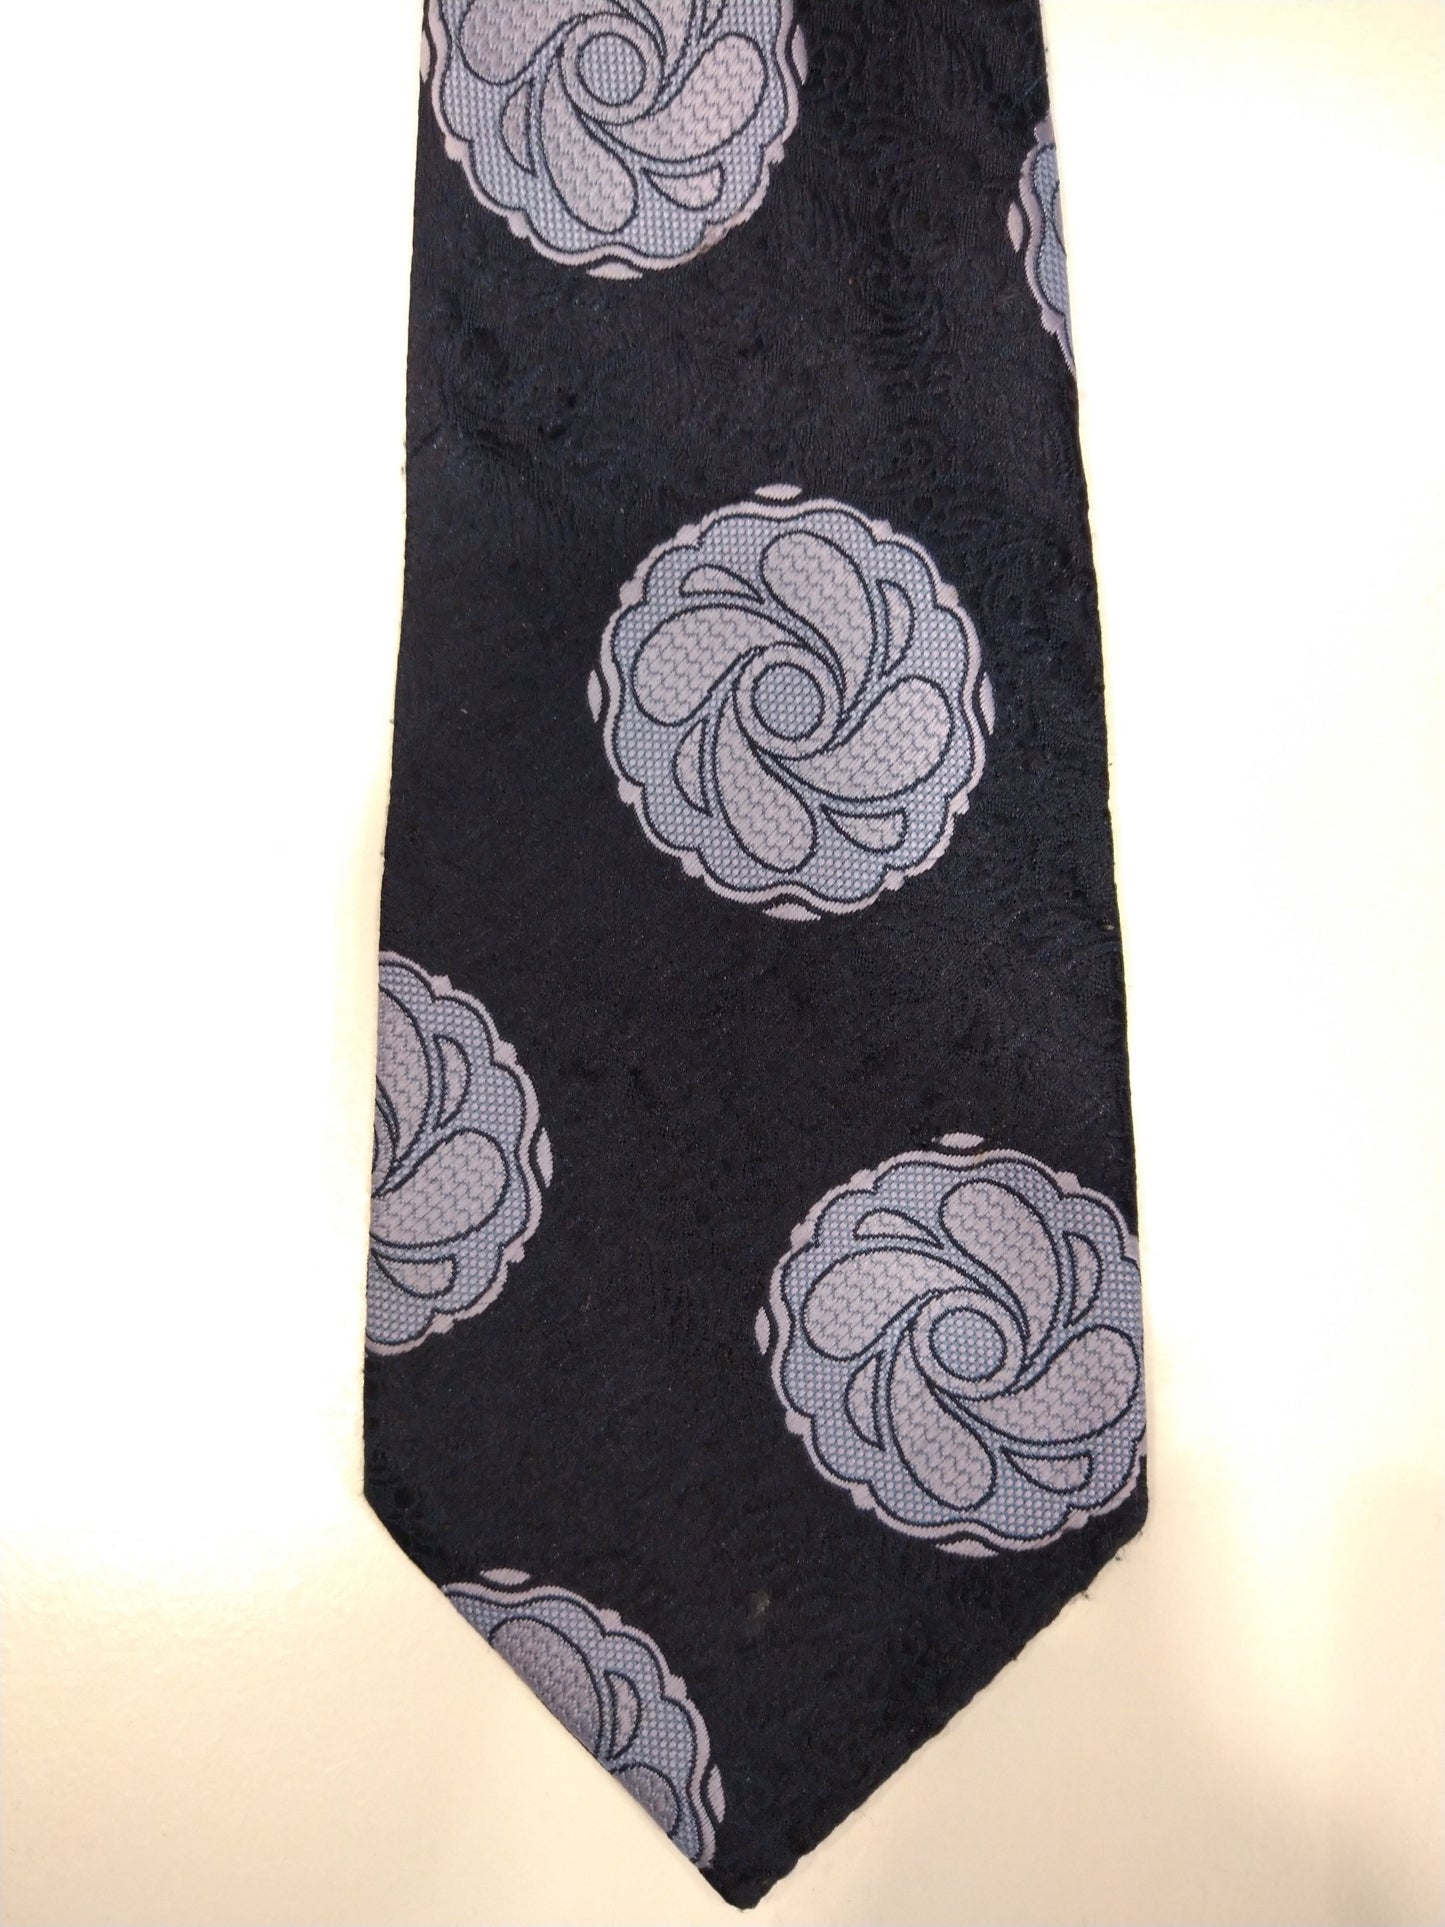 Vintage Triton Polyester Krawatte. Schönes blau / hellblaues Vintage -Motiv.